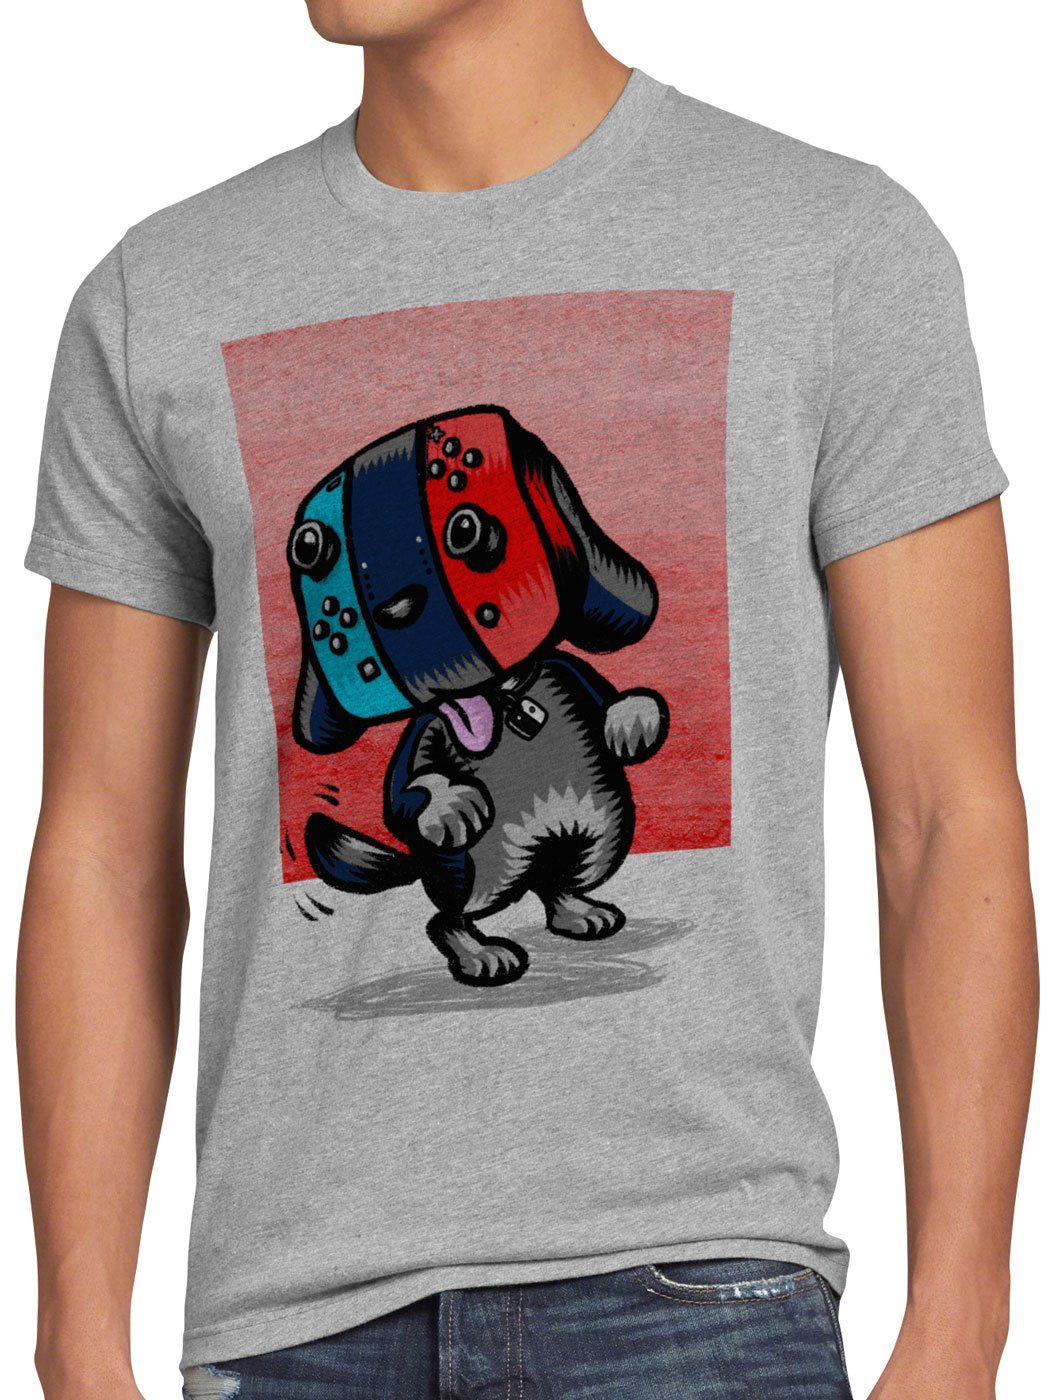 style3 Print-Shirt Herren T-Shirt Switch Hund pro gamer konsole joy-con grau meliert